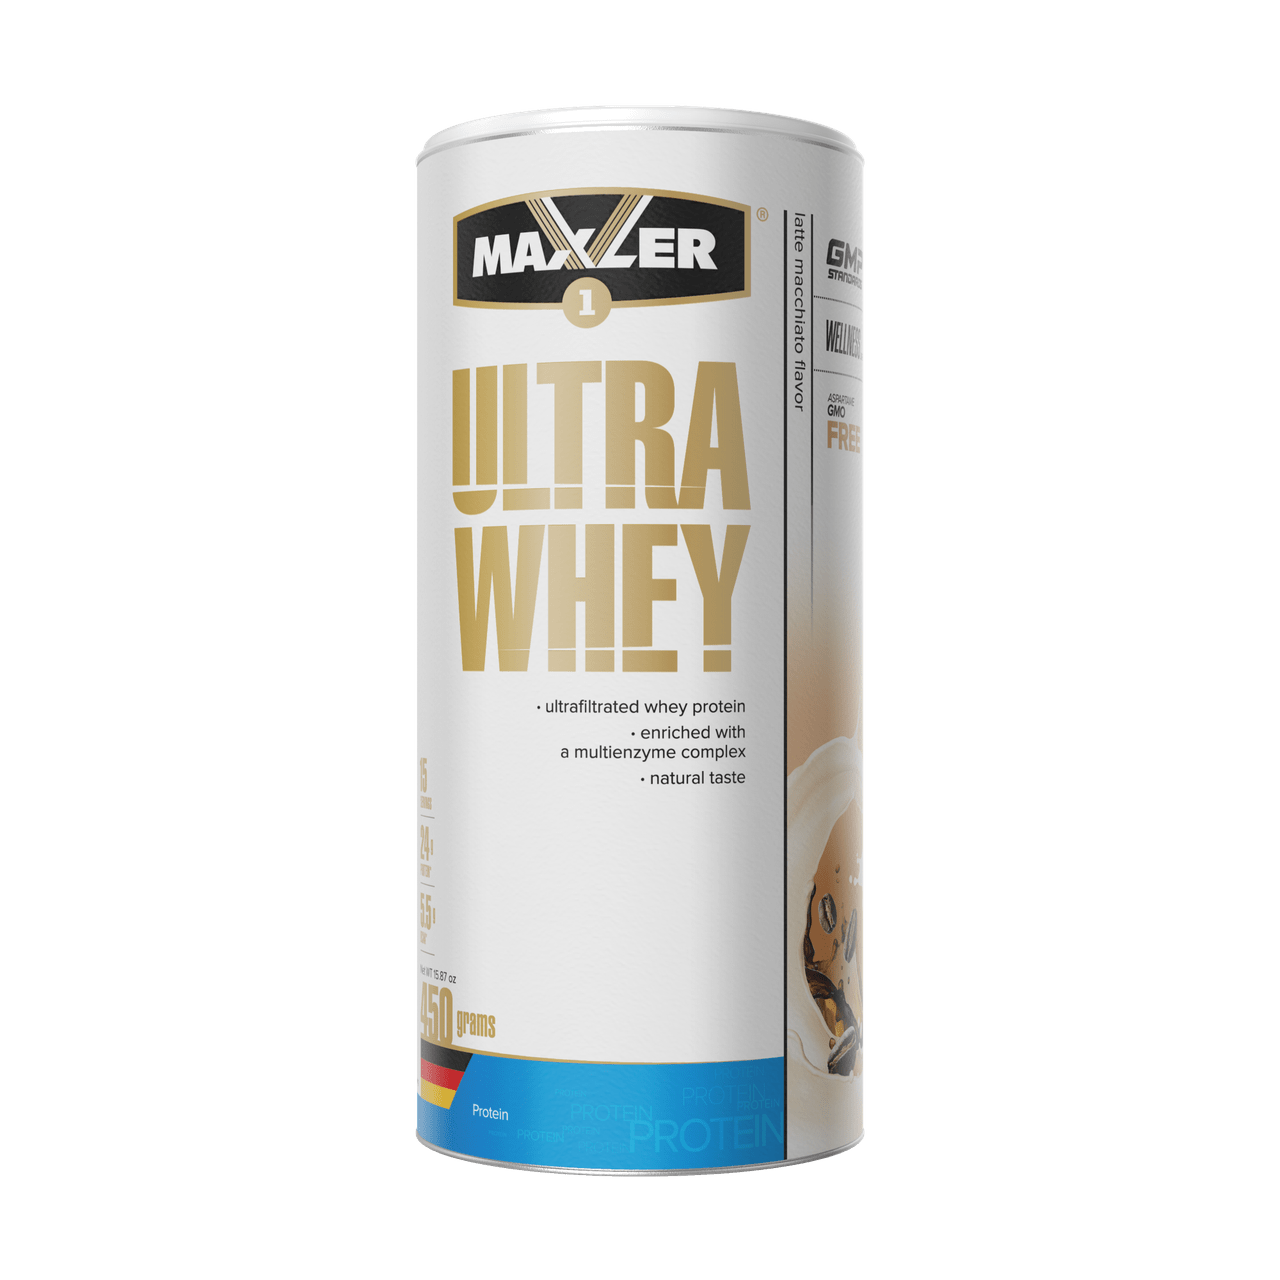 Maxler Maxler Ultra Whey 450 г – латте макиато, , 0.45 